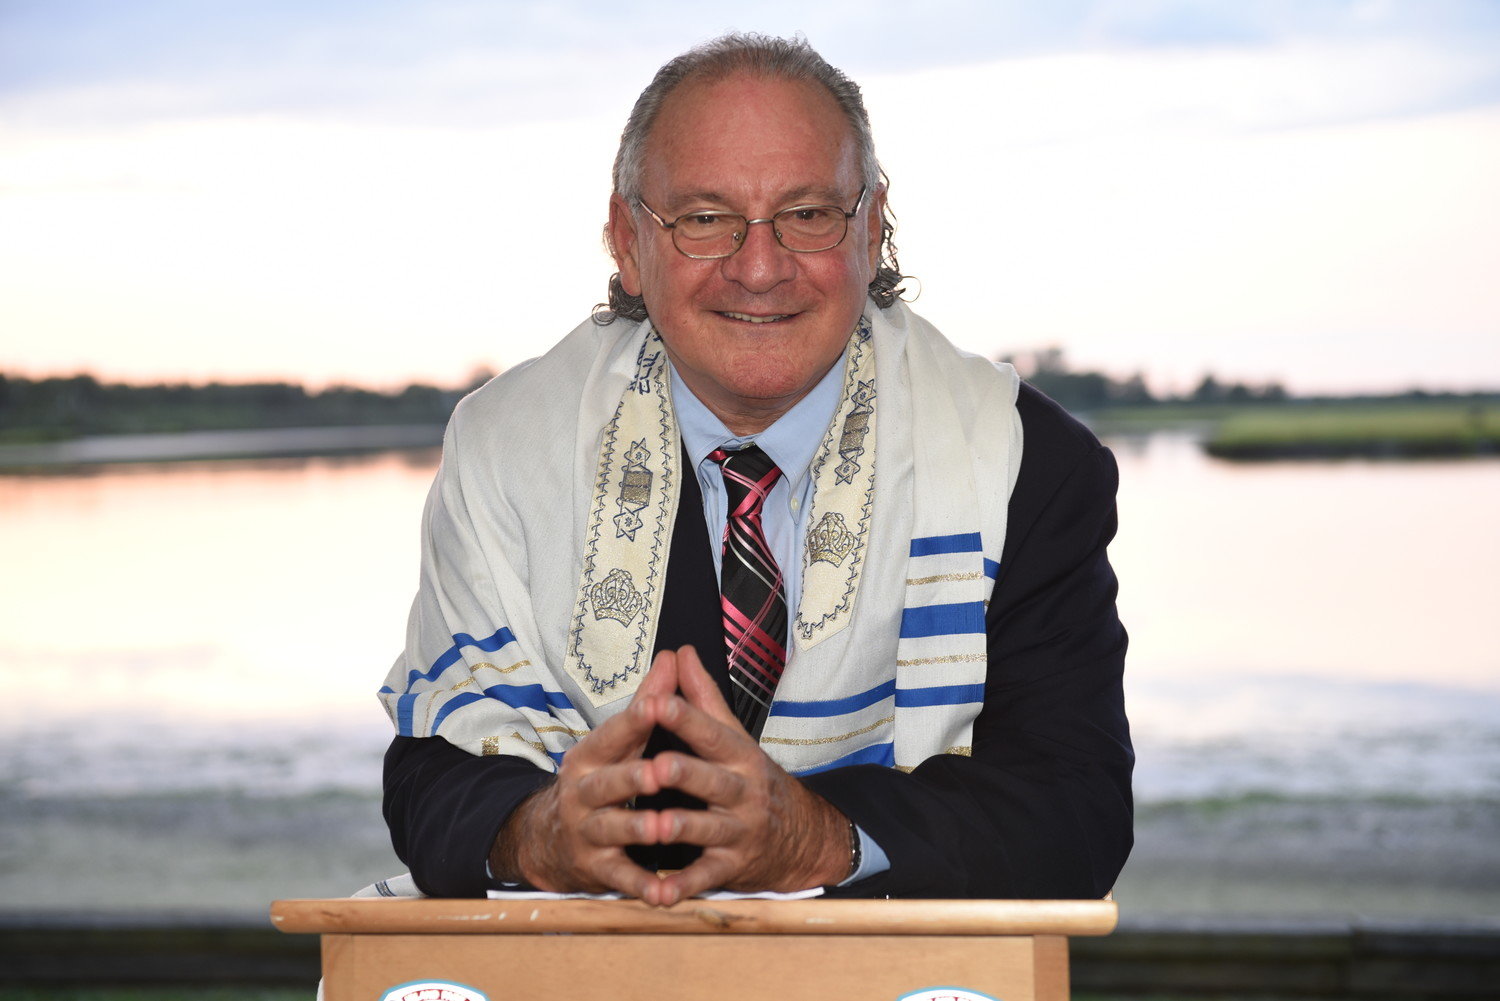 Rabbi Paul Hoffman, of South Shore Jewish Center in Island Park